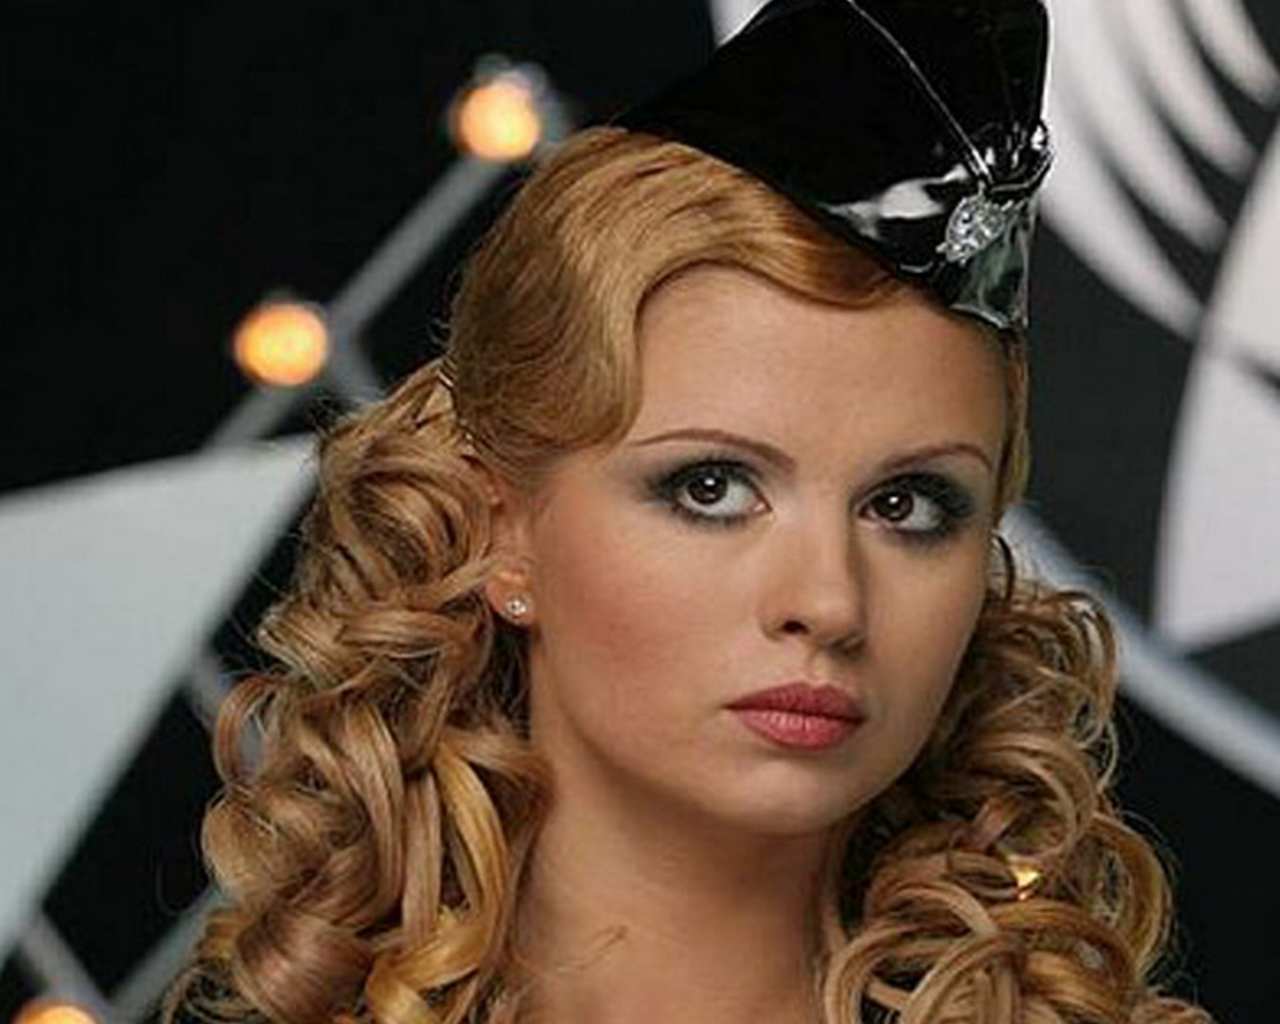 Анна Семенович, певица, актриса